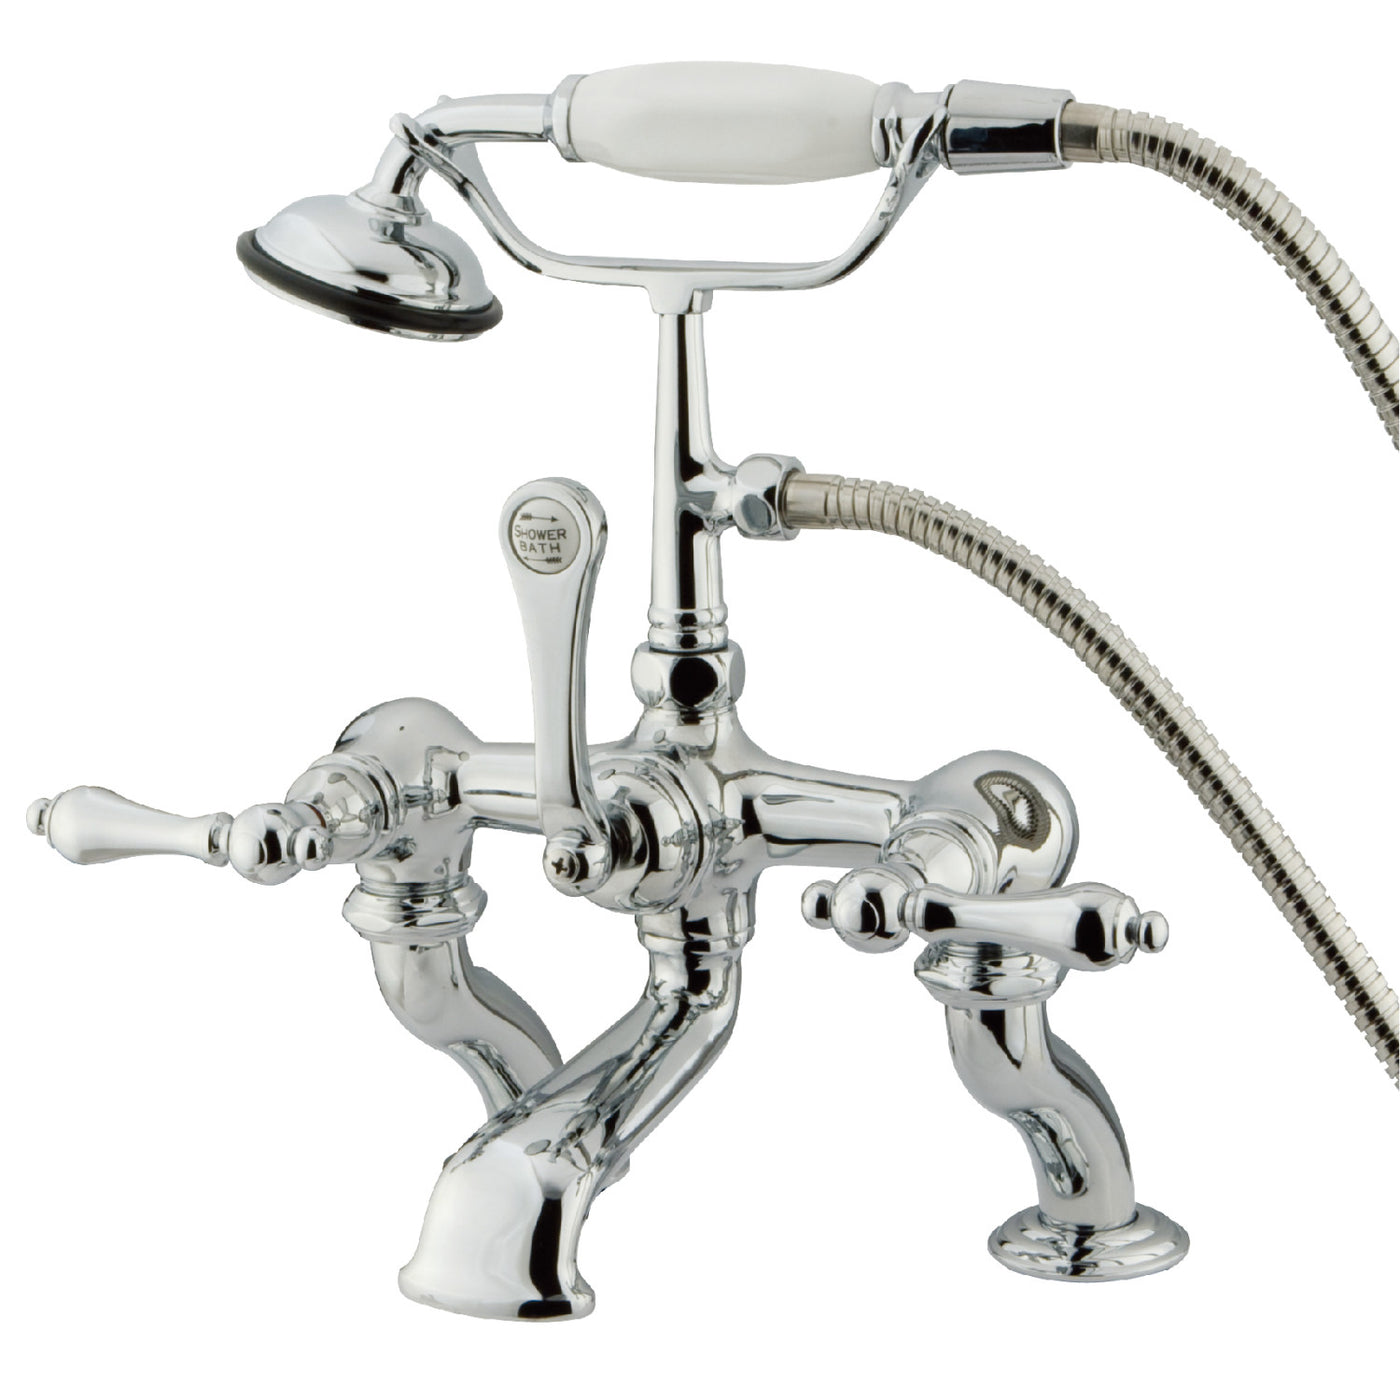 Elements of Design DT4101AL 7-Inch Deck Mount Tub Faucet with Hand Shower, Polished Chrome